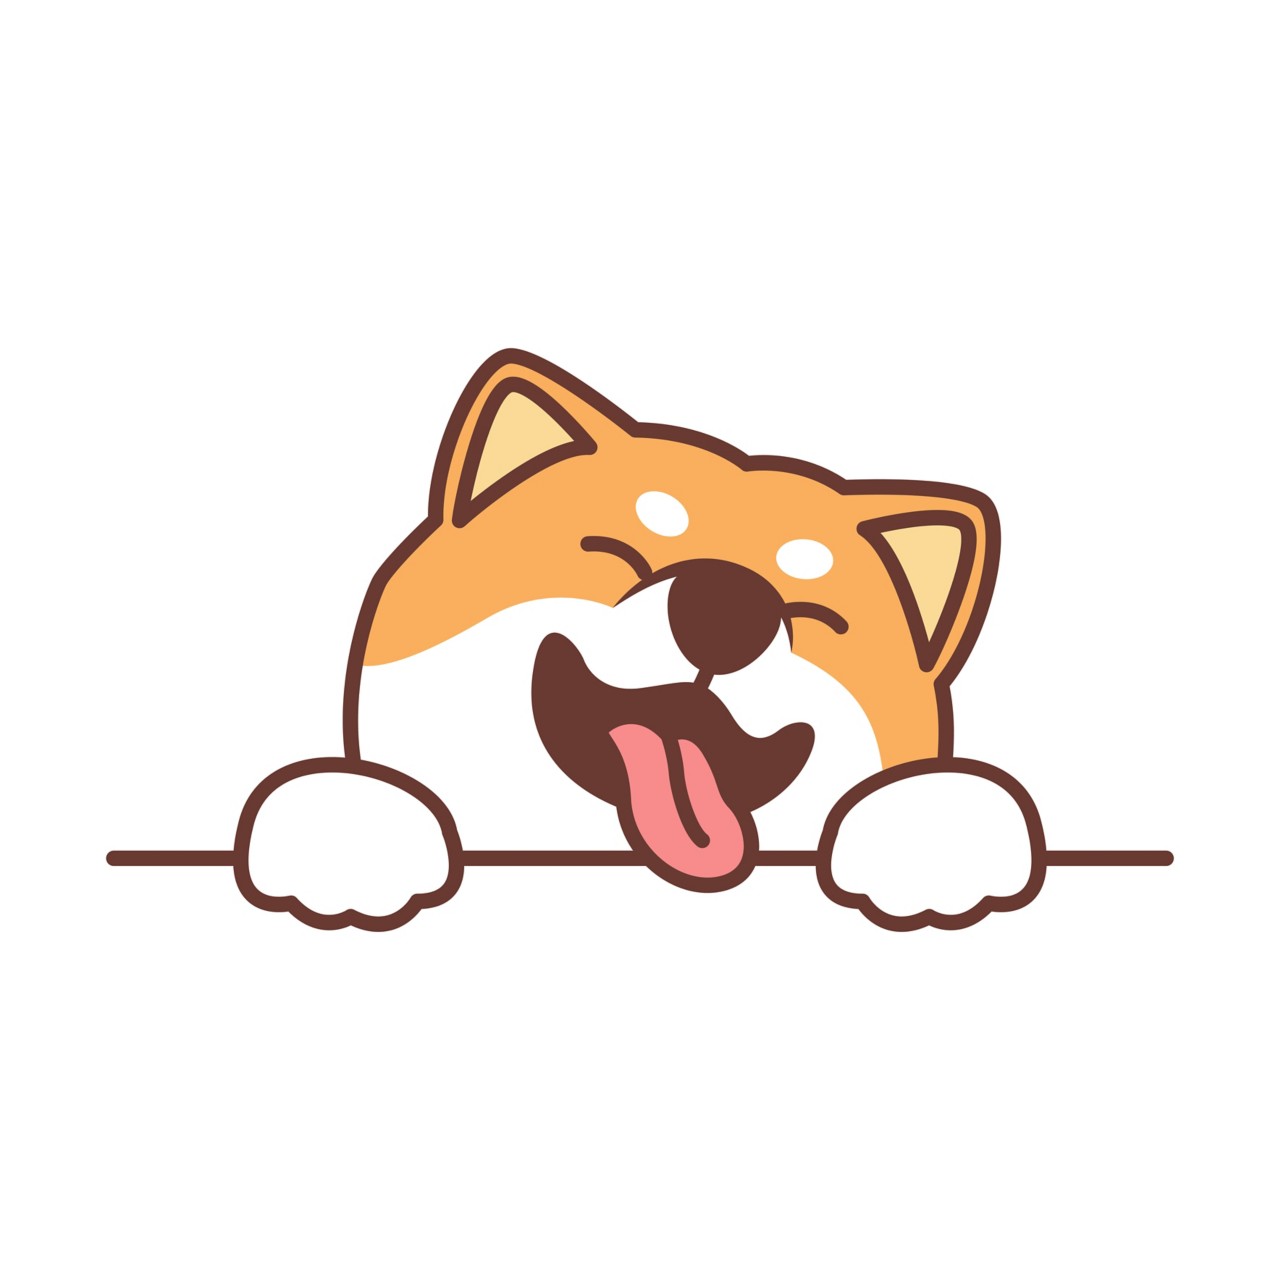 Cute shiba inu dog paws up over wall, dog face cartoon icon, vector illustration